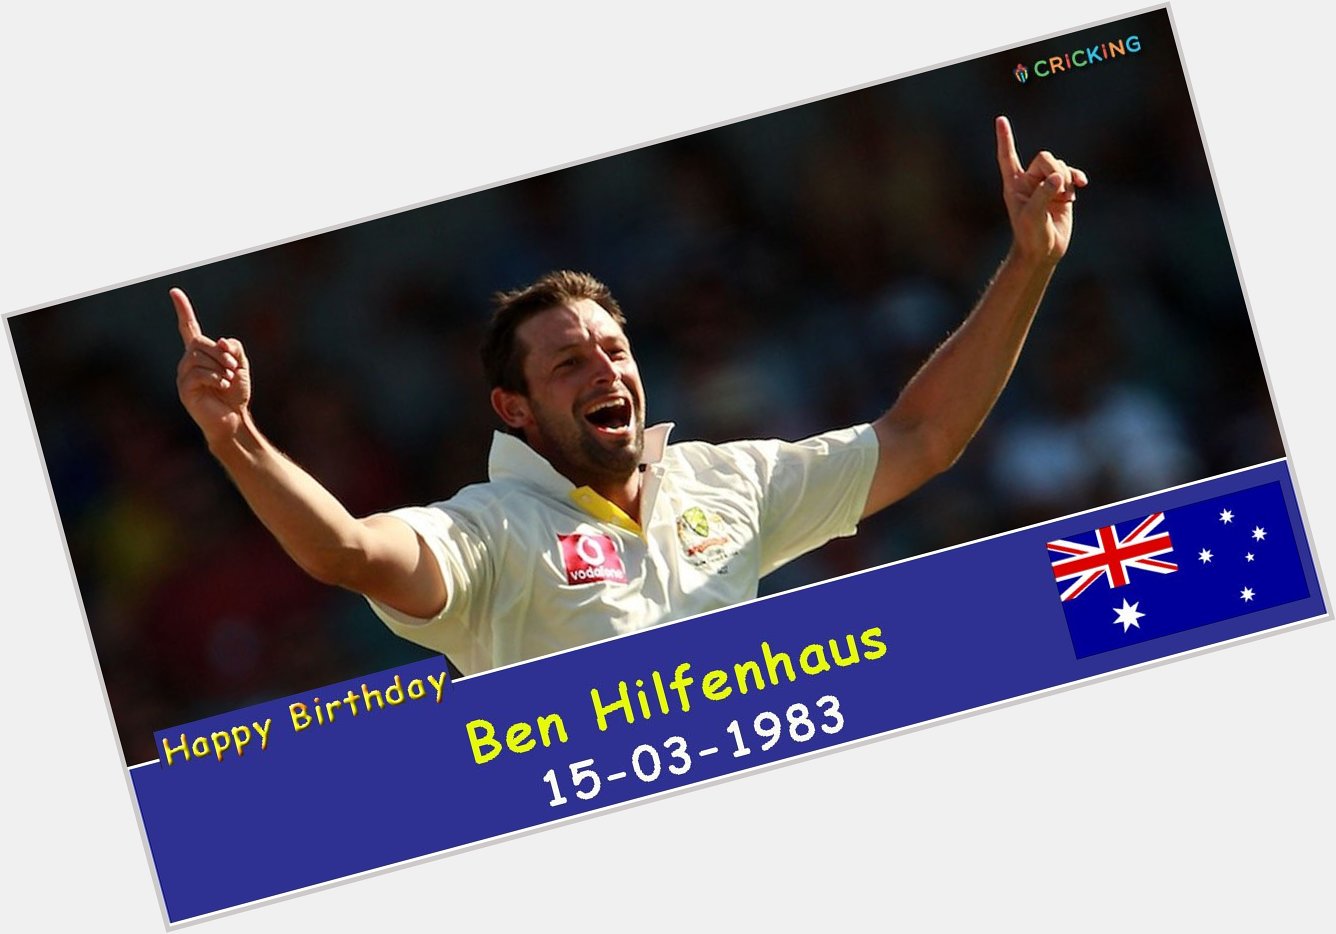 Happy Birthday Ben Hilfenhaus.  The Australian cricketer turns 34 today. 